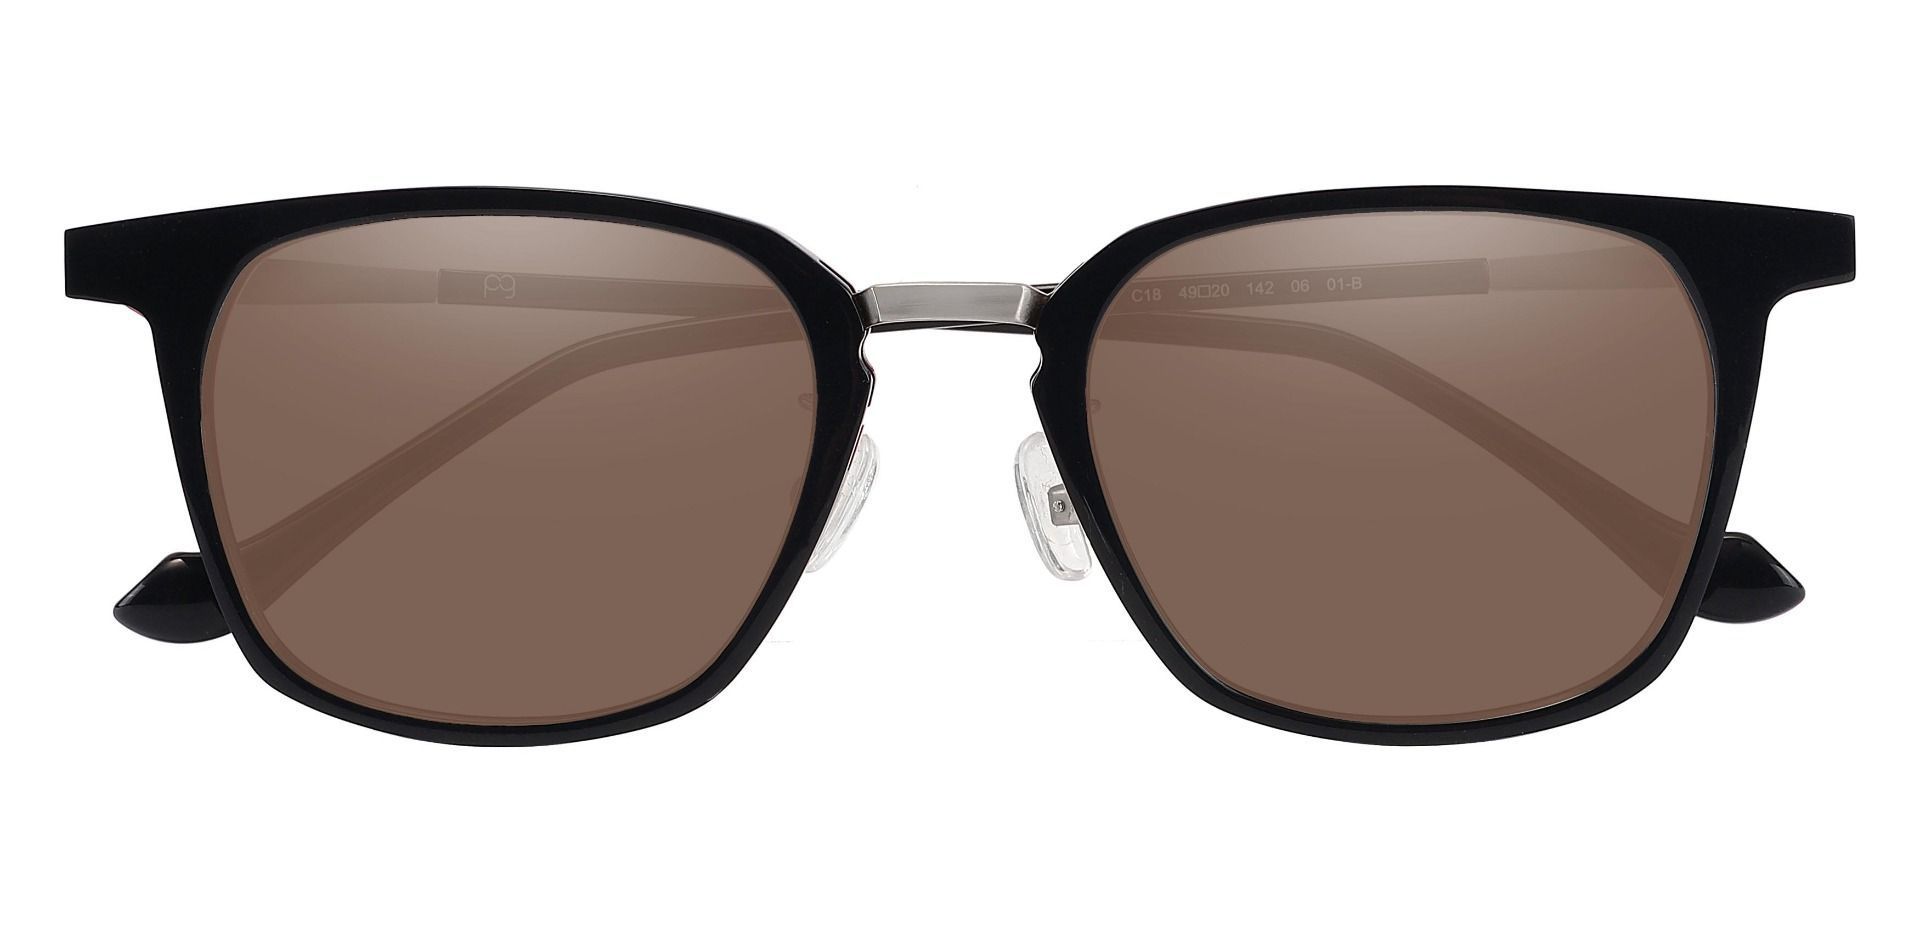 Rex Square Progressive Sunglasses - Black Frame With Brown Lenses